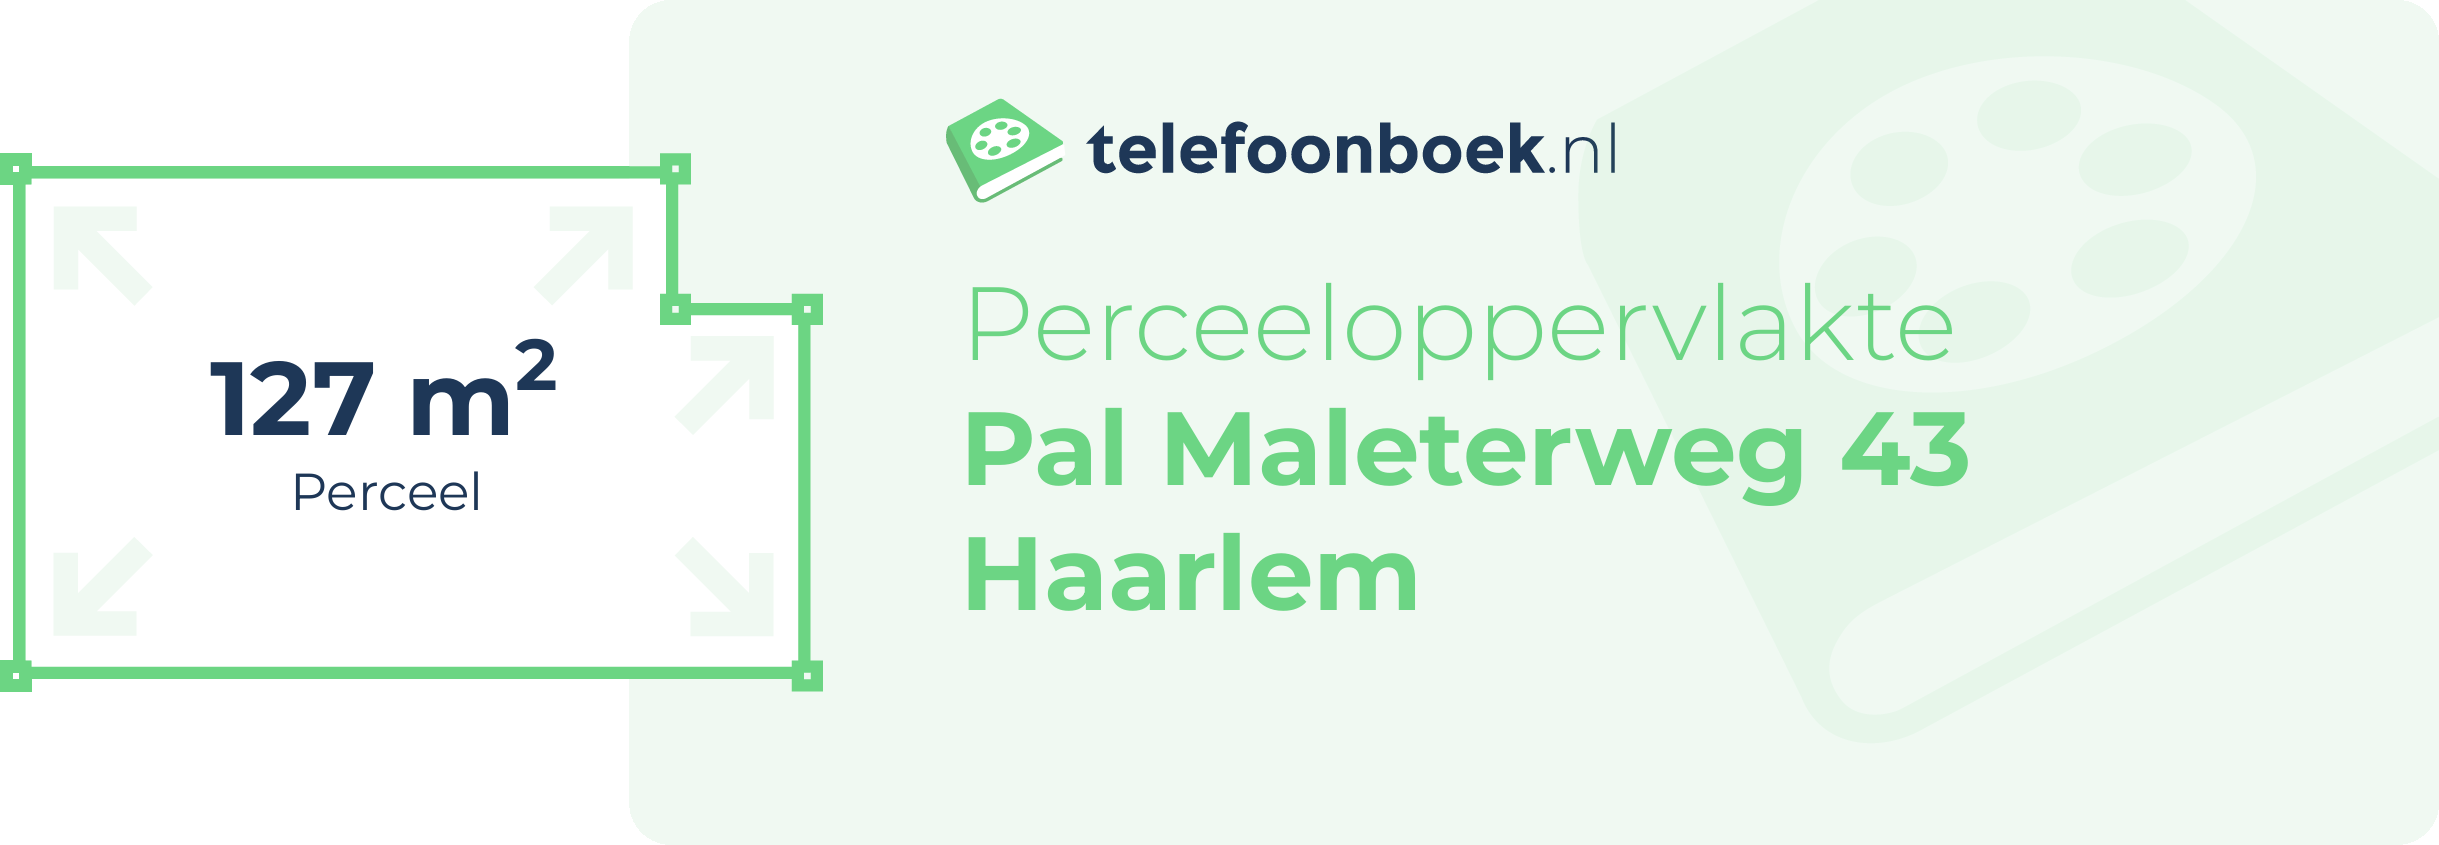 Perceeloppervlakte Pal Maleterweg 43 Haarlem